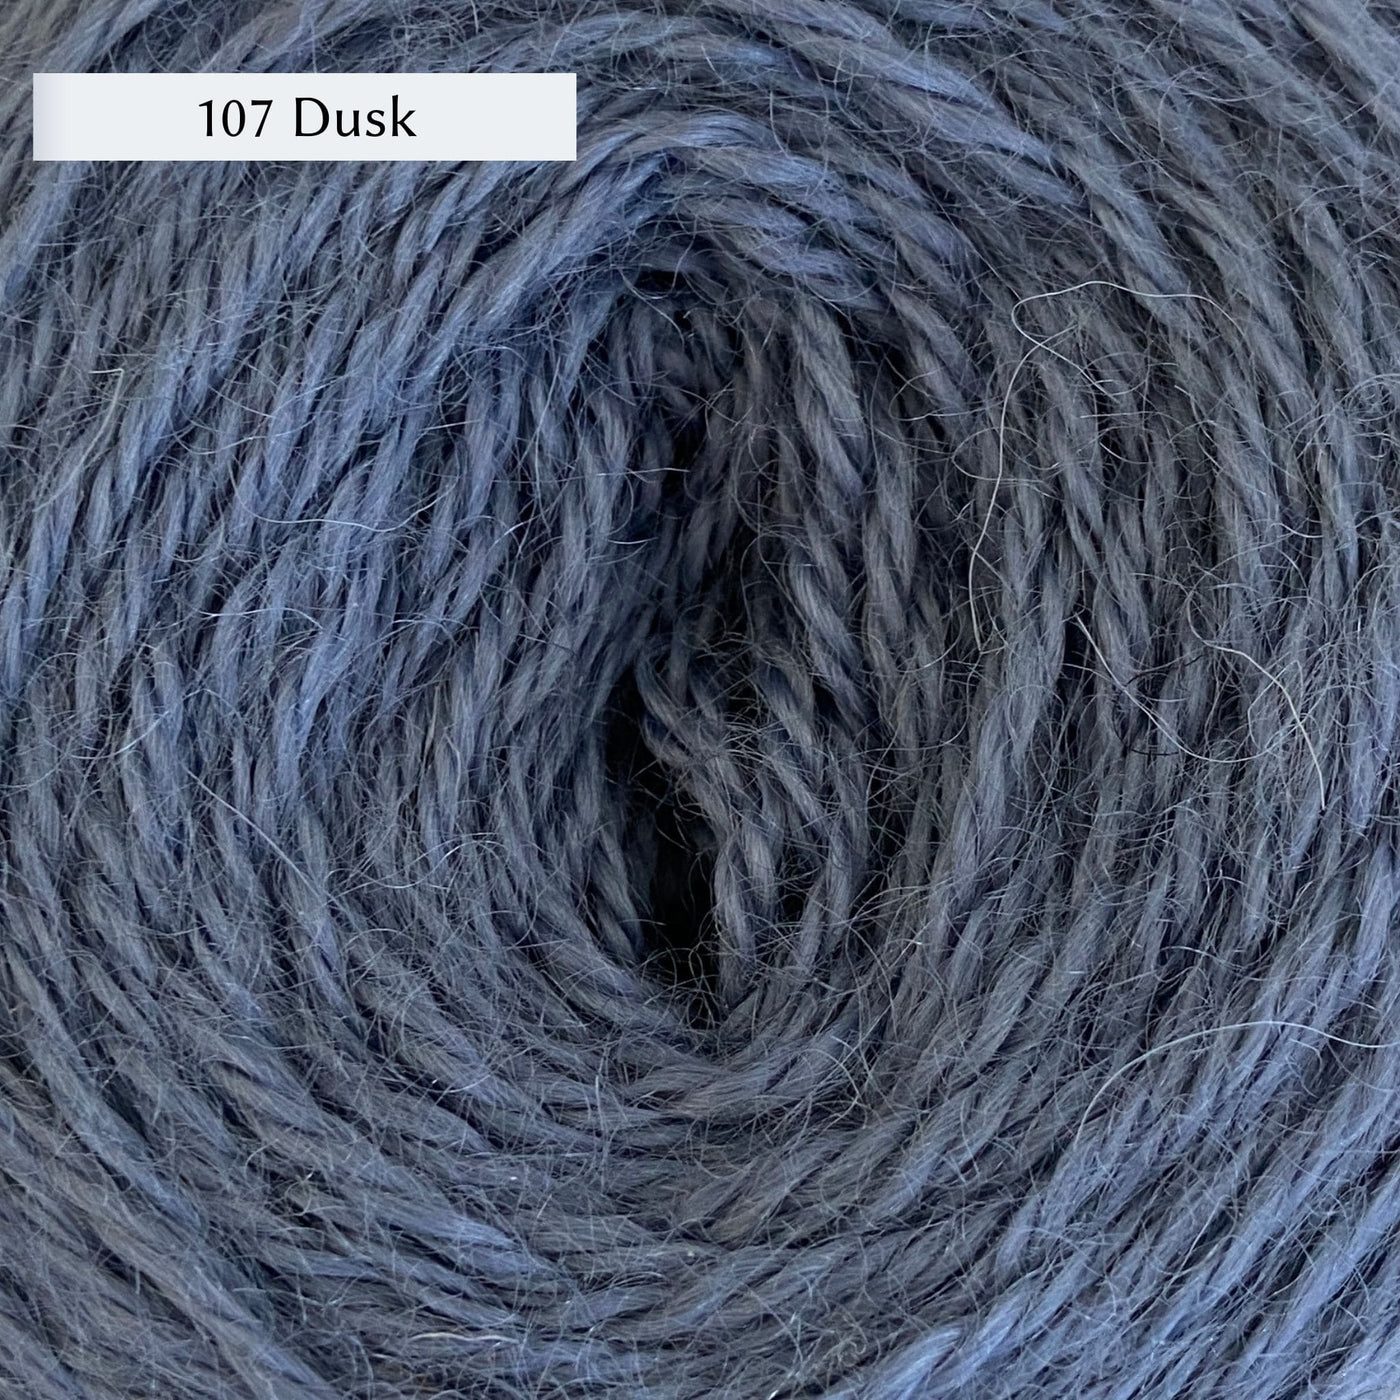 Wensleydale Longwool Aran, an aran weight yarn made from Wensleydale sheep, in color 107 Dusk, a dusty cornflower blue